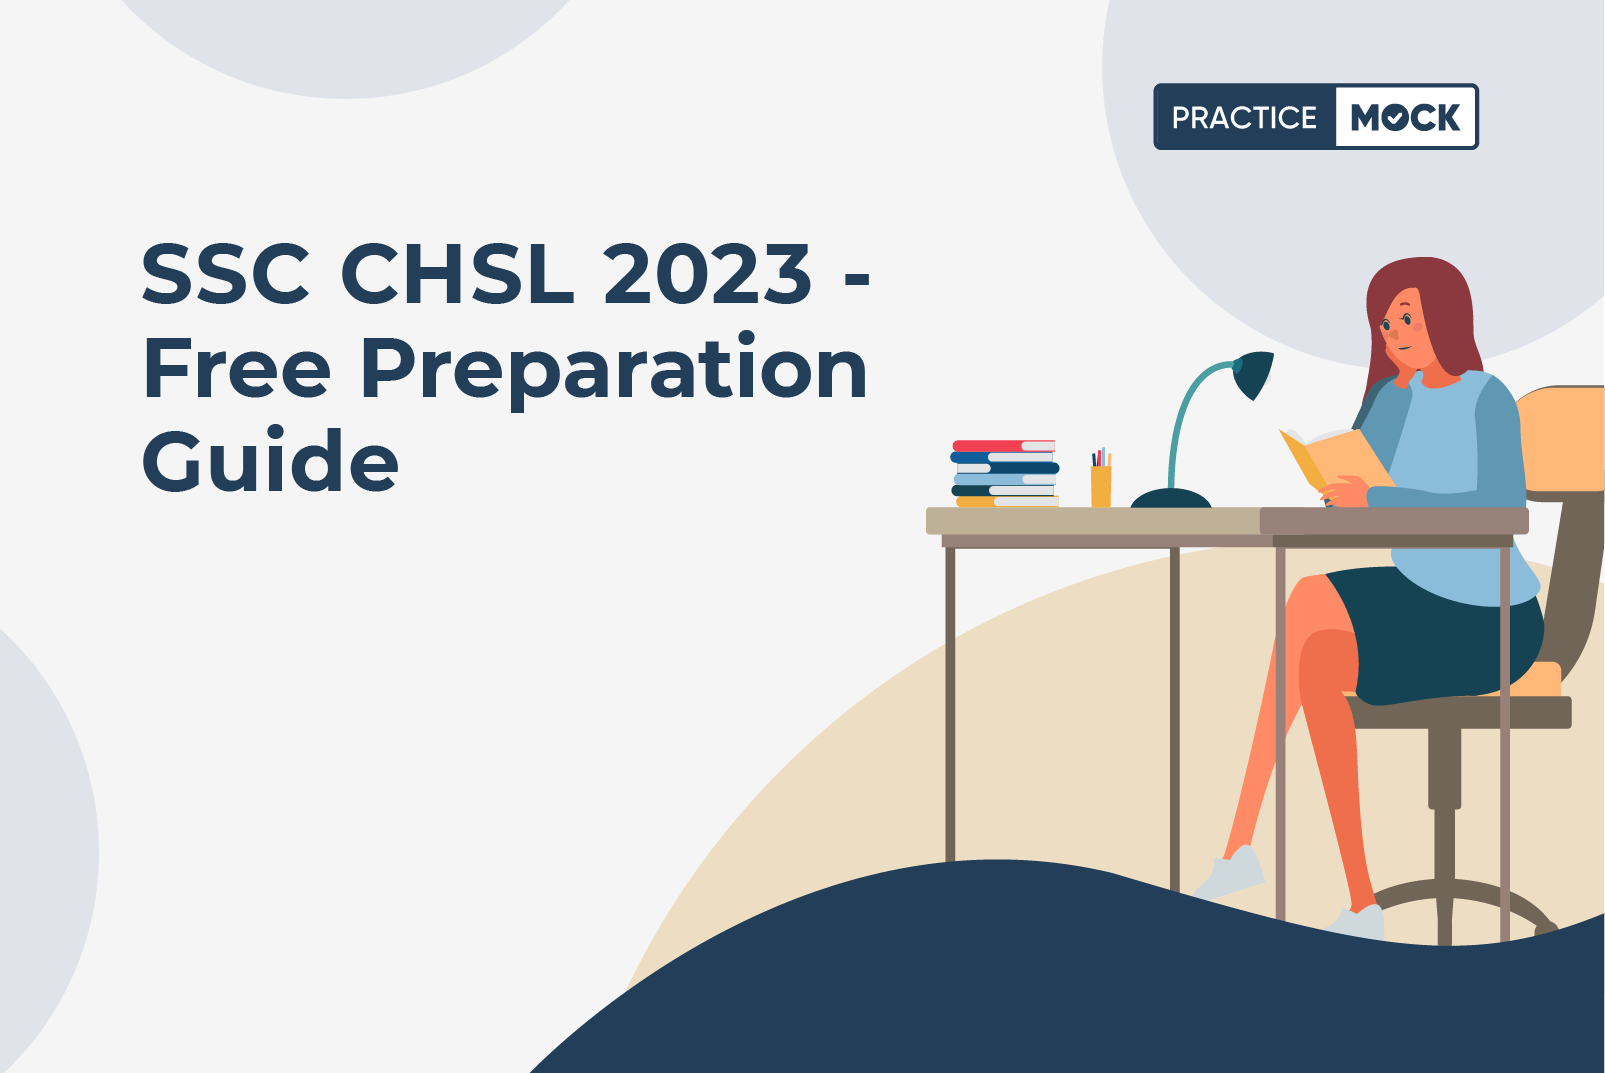 SSC CHSL 2023 - Free Preparation Guide